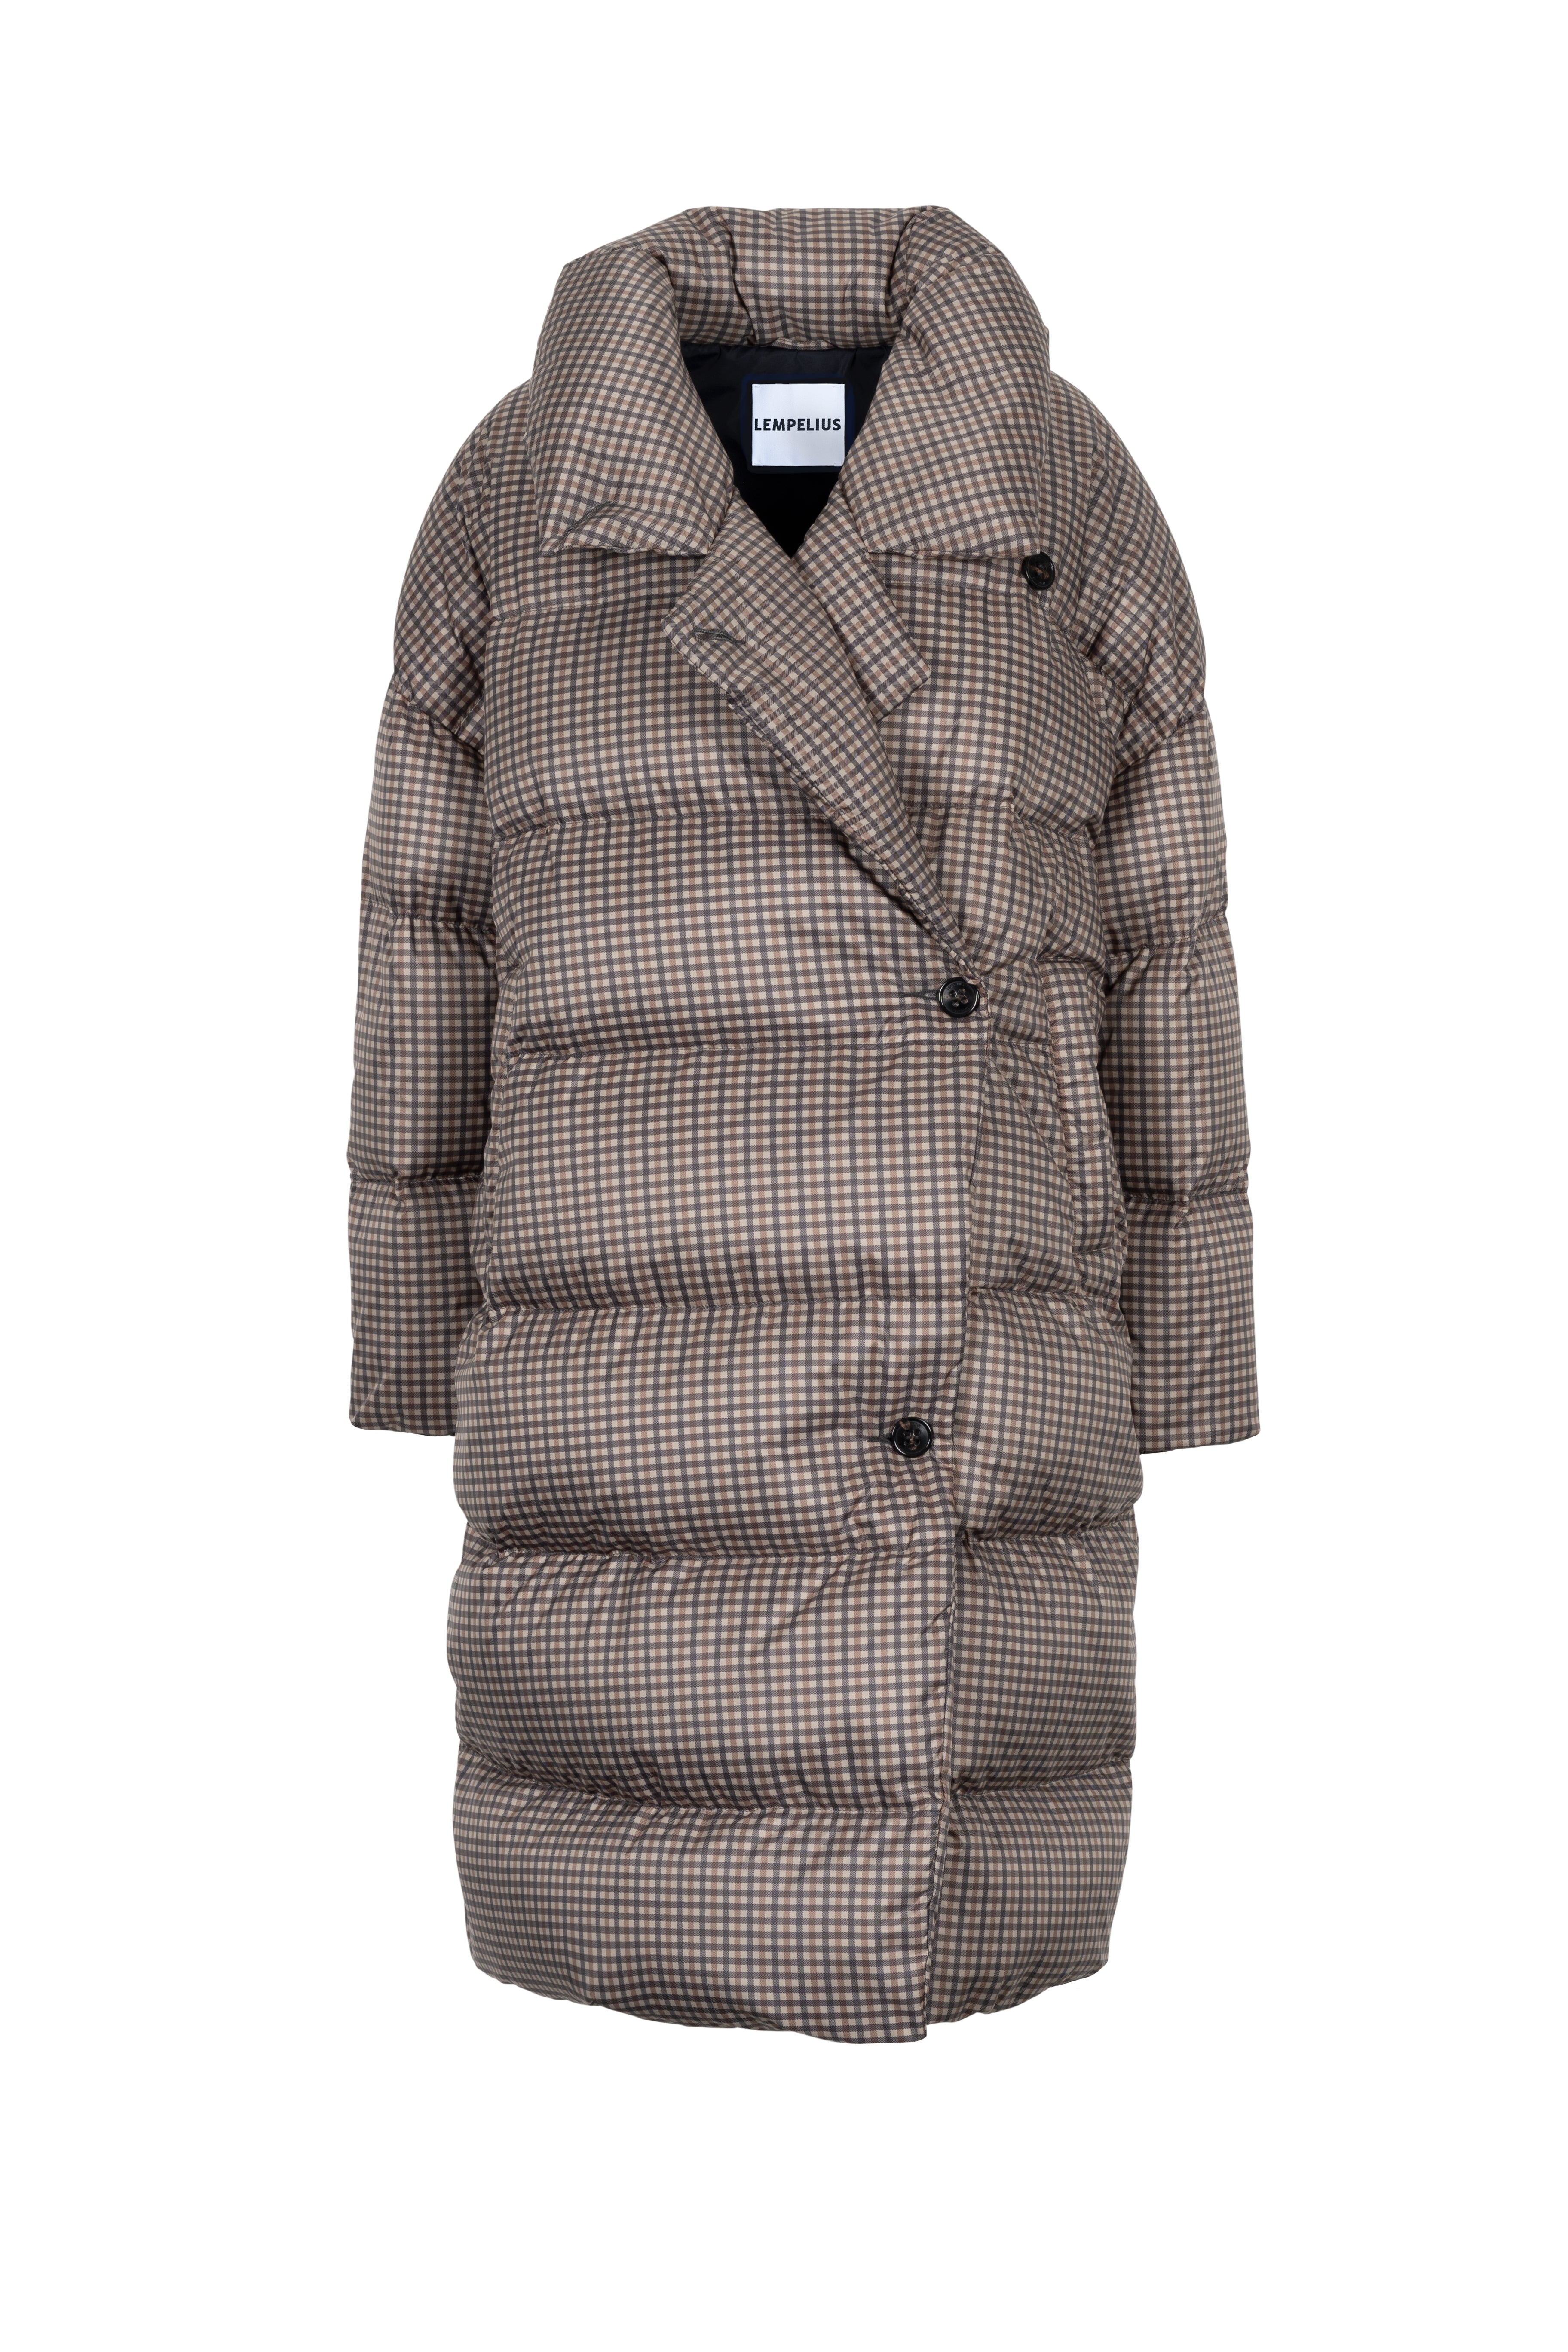 Oversized Lempelius wrap down coat with check print